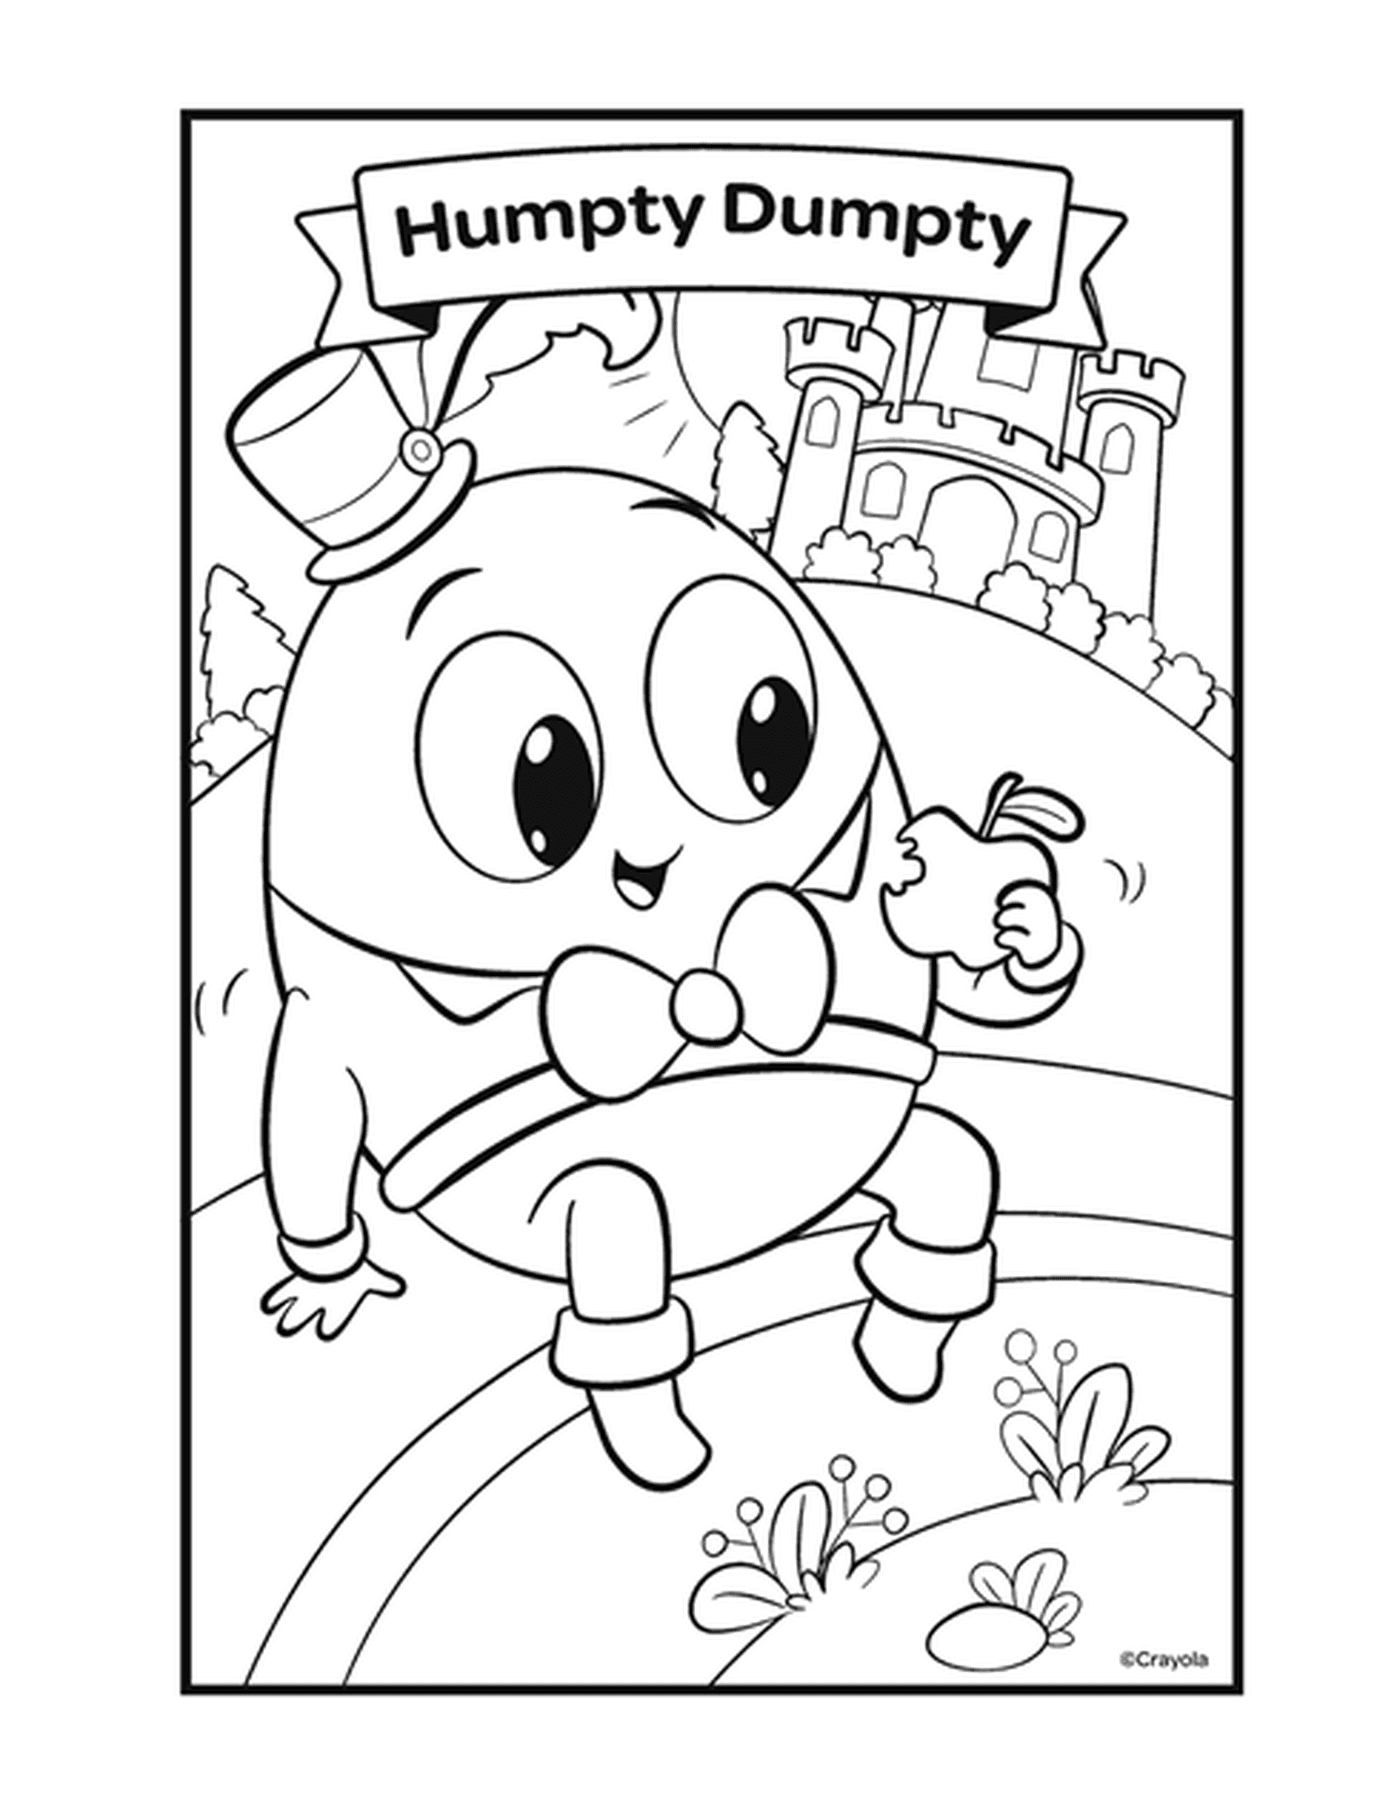  Die Figur Humpty Dumpty mit eiförmigem Charakter 